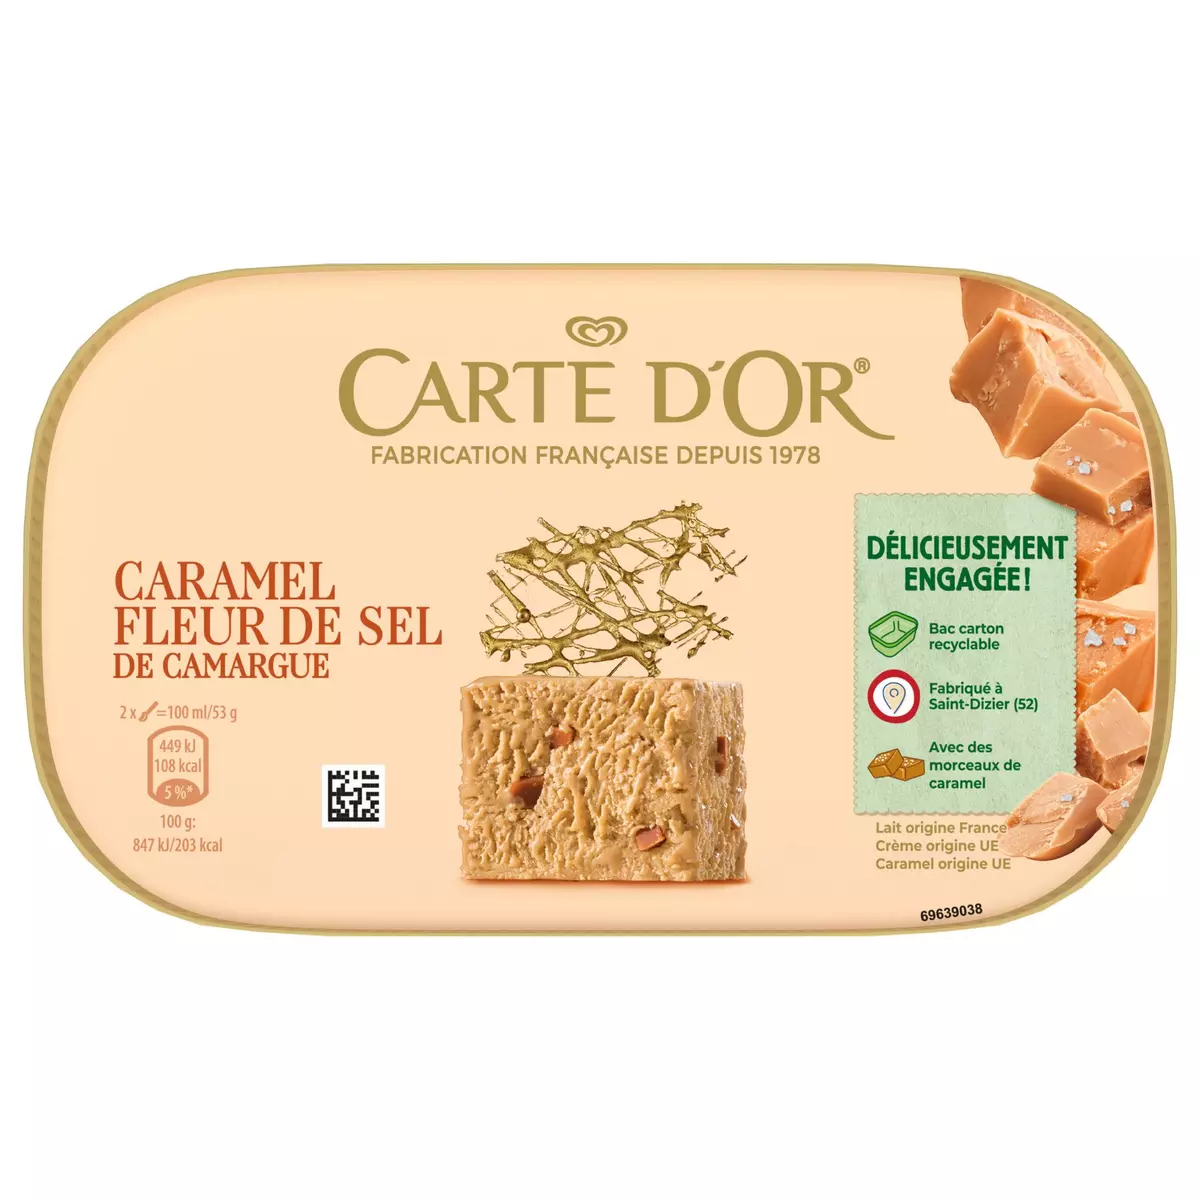 CARTE D'OR Crème glacée caramel fleur de sel de Camargue 480g